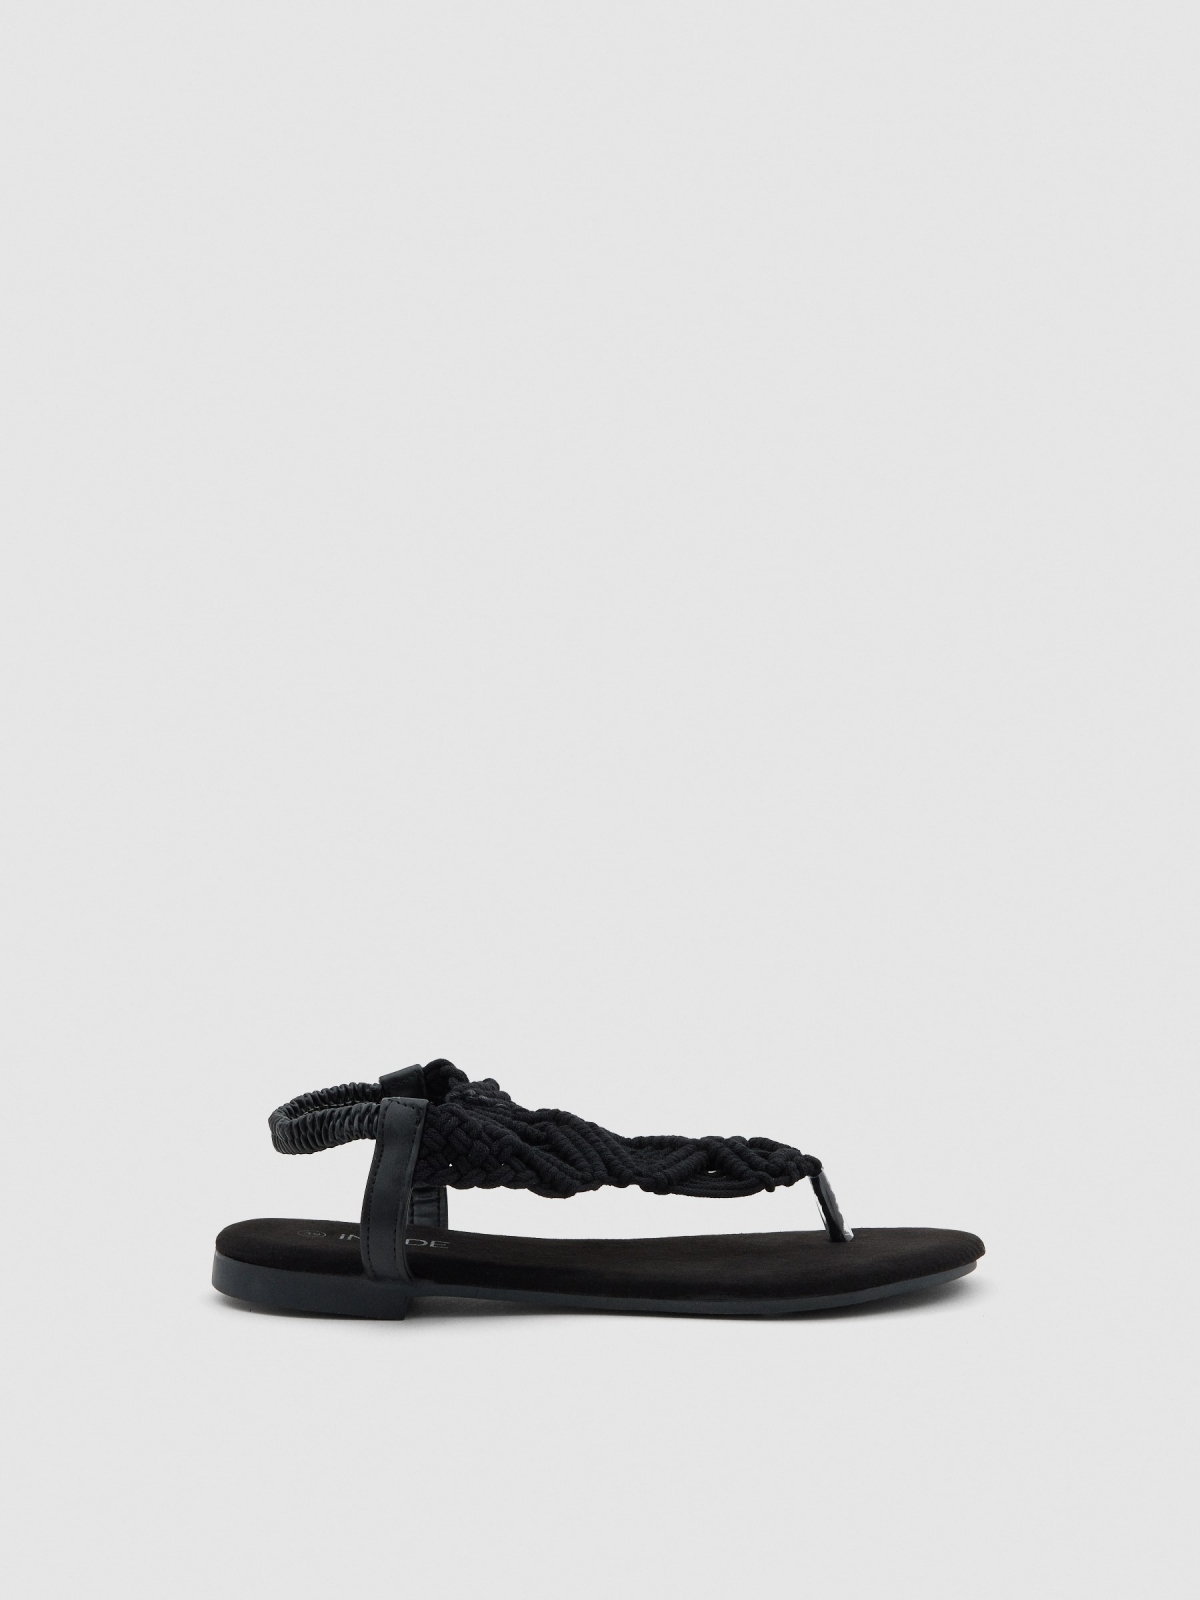 Black macramé sandal black